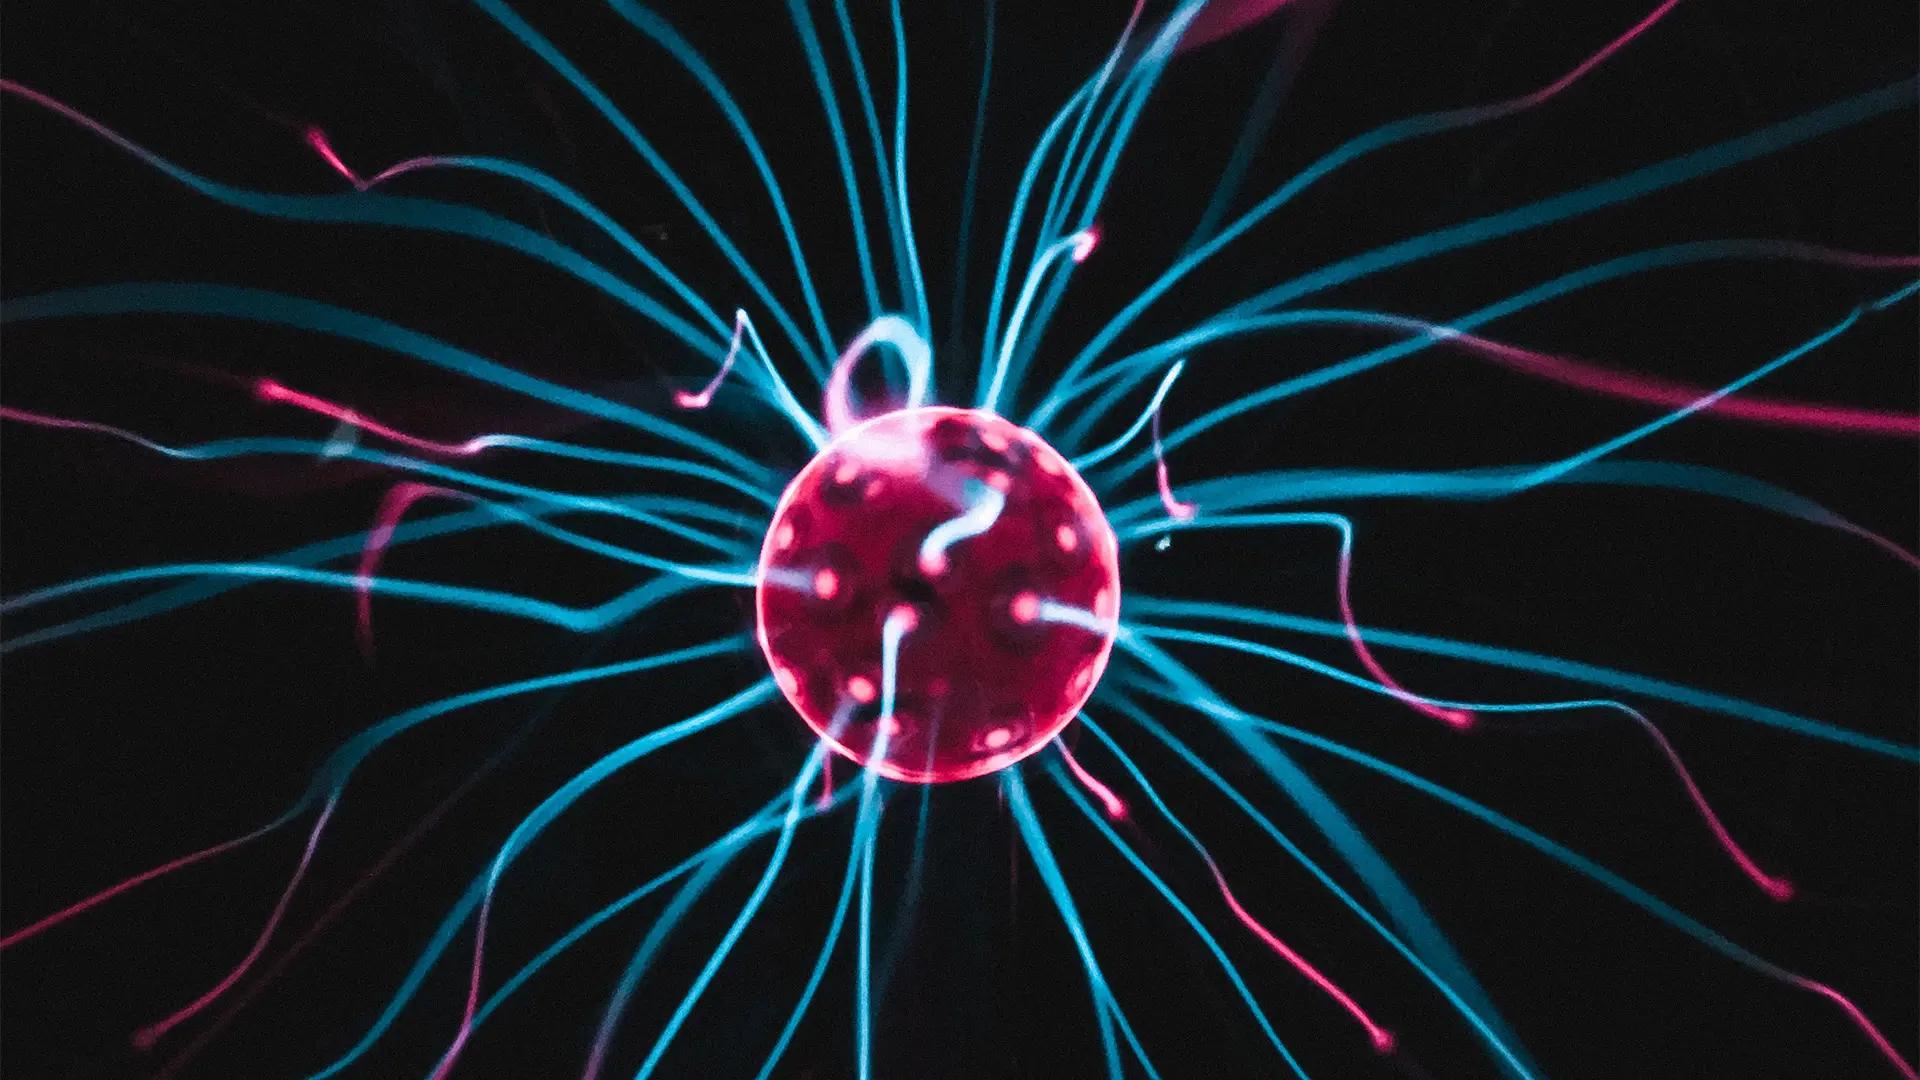 Detail image on a plasma ball